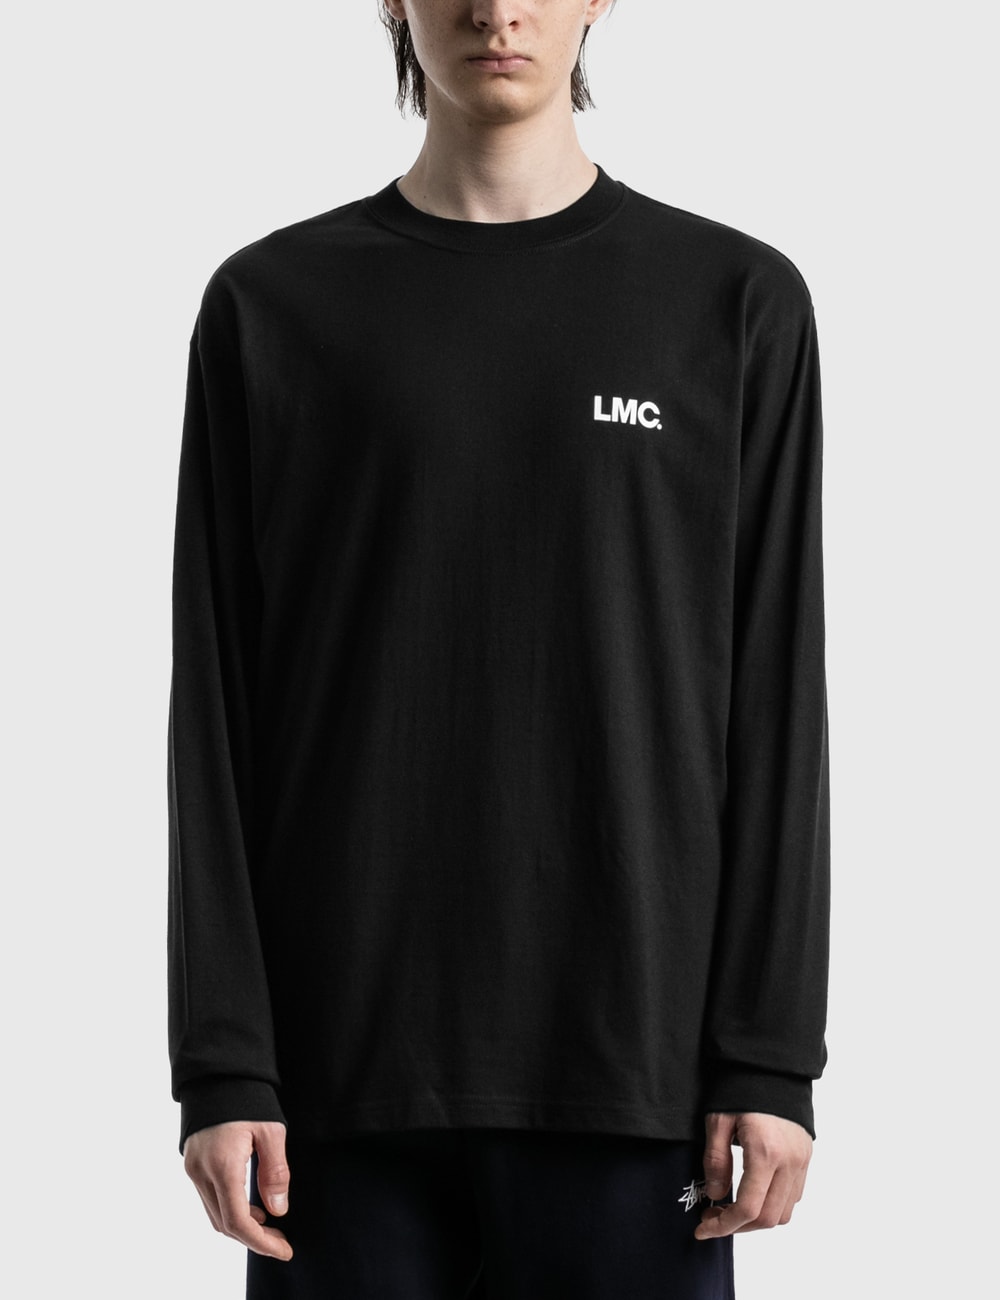 LMC - LMC Basic OG Long Sleeve T-shirt | HBX